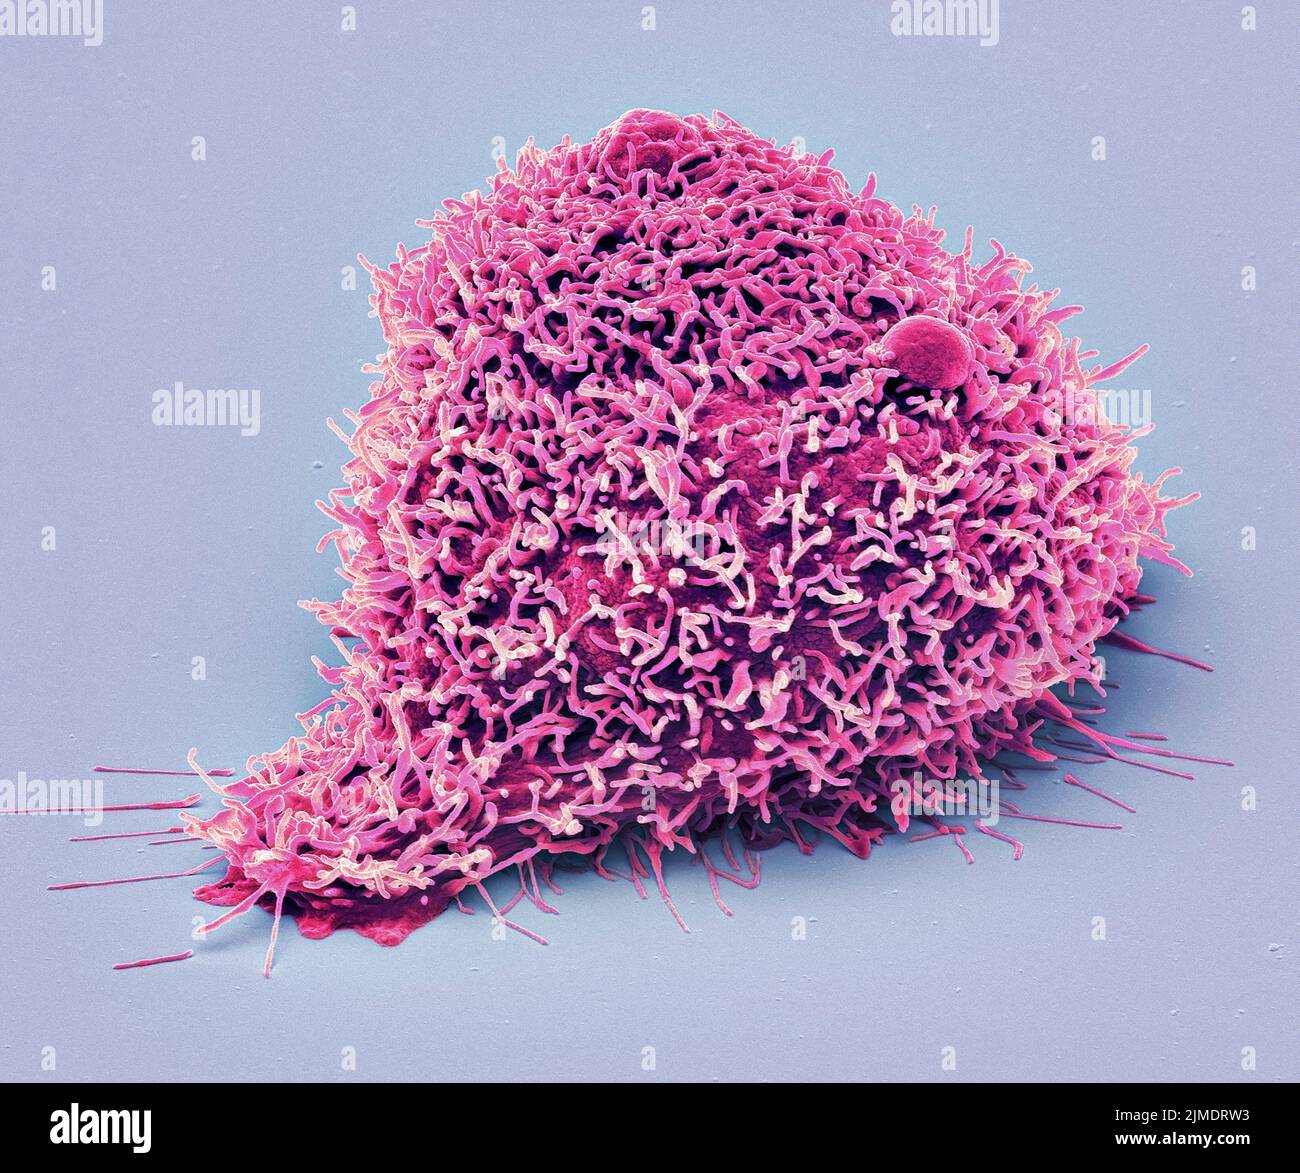 Kidney cancer cell, SEM Stock Photo